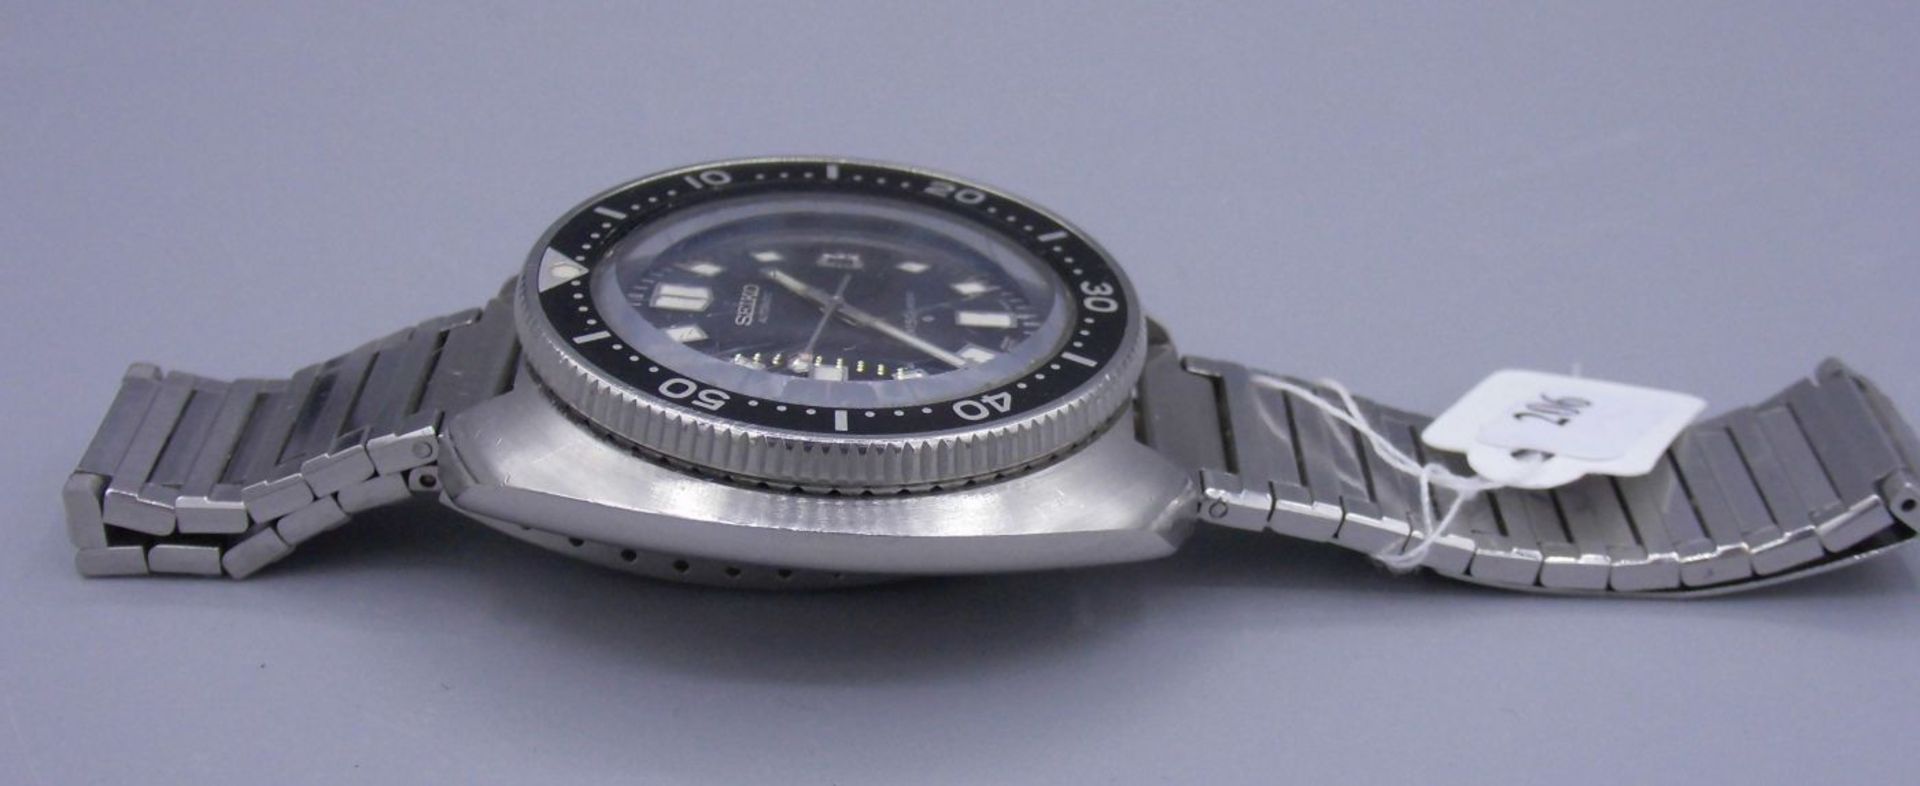 VINTAGE ARMBANDUHR / TAUCHERUHR: SEIKO / divers wristwatch, Automatik-Uhr, 1974, Japan, Stahlgehäuse - Bild 5 aus 7